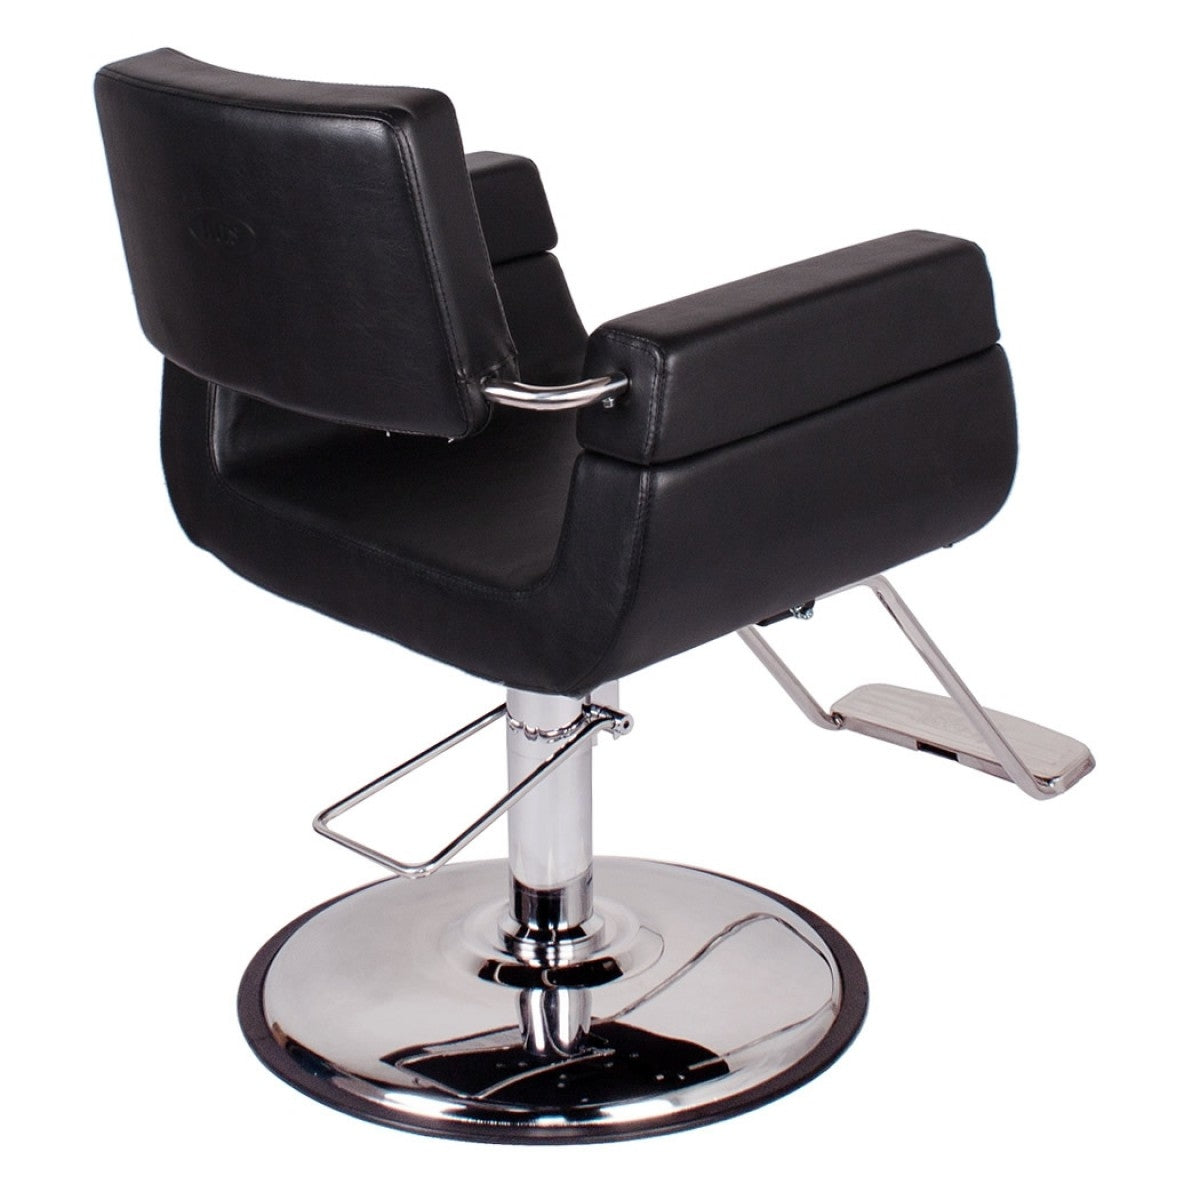 ADELE Salon Styling Chair